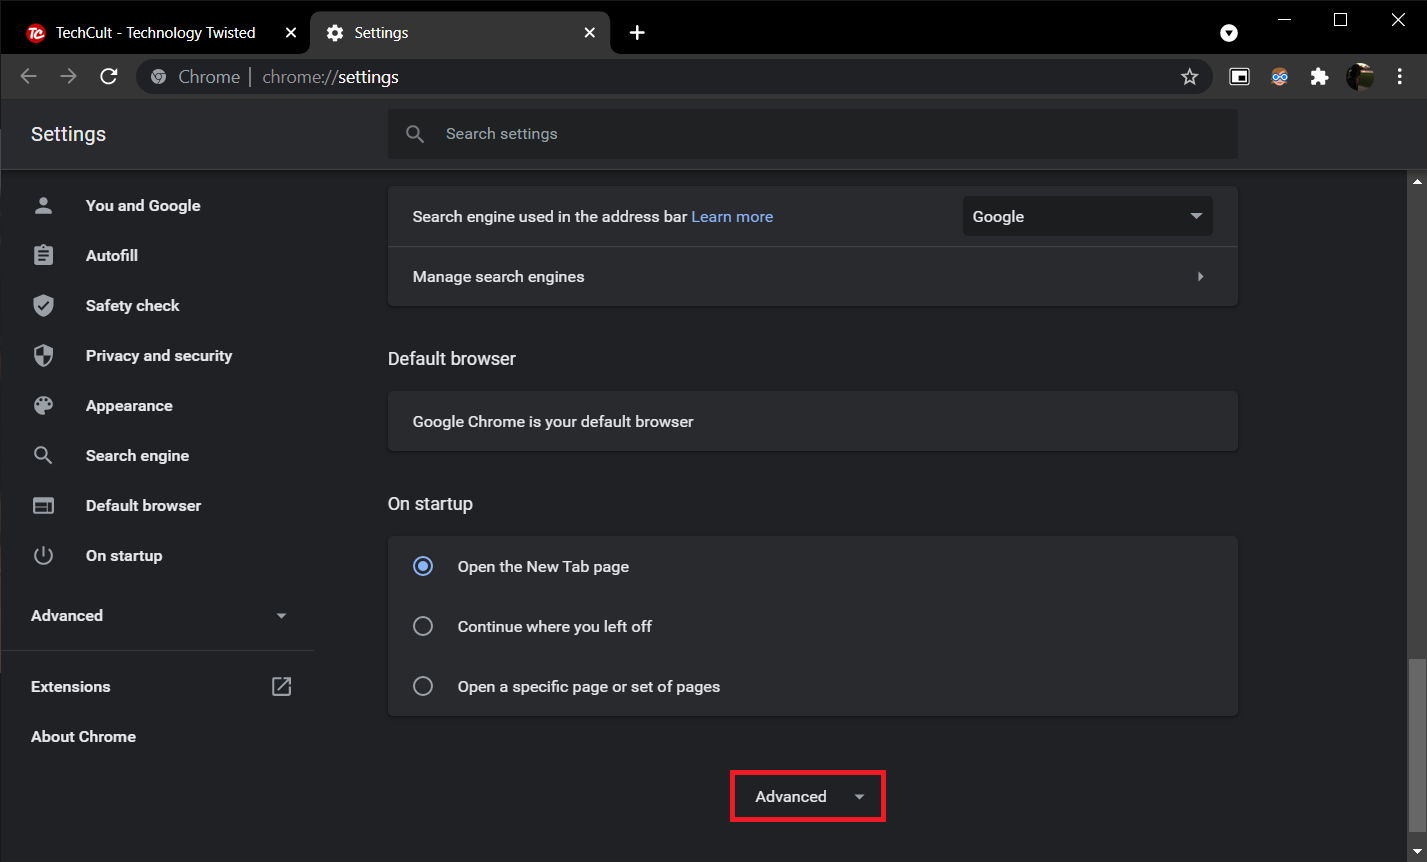 Google Chrome Settings page. How to Fix Taskbar Showing in Fullscreen on Windows 10